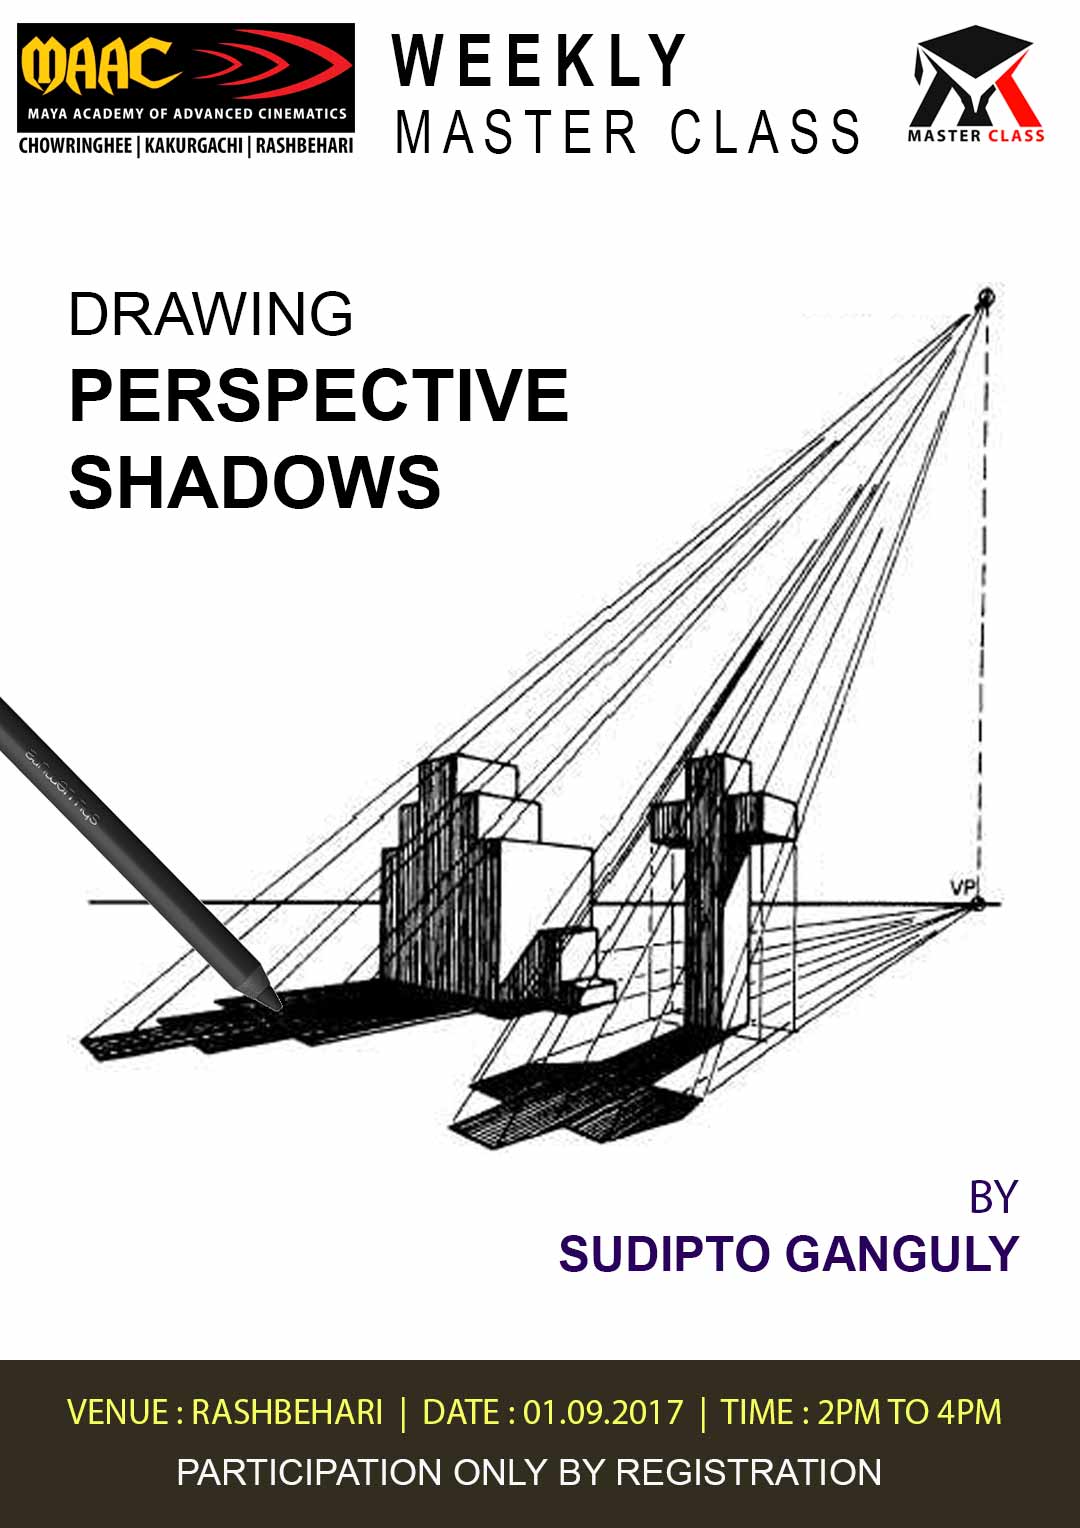 Weekly Master Class on Drawing Perspective Shadows - Sudipto Ganguli